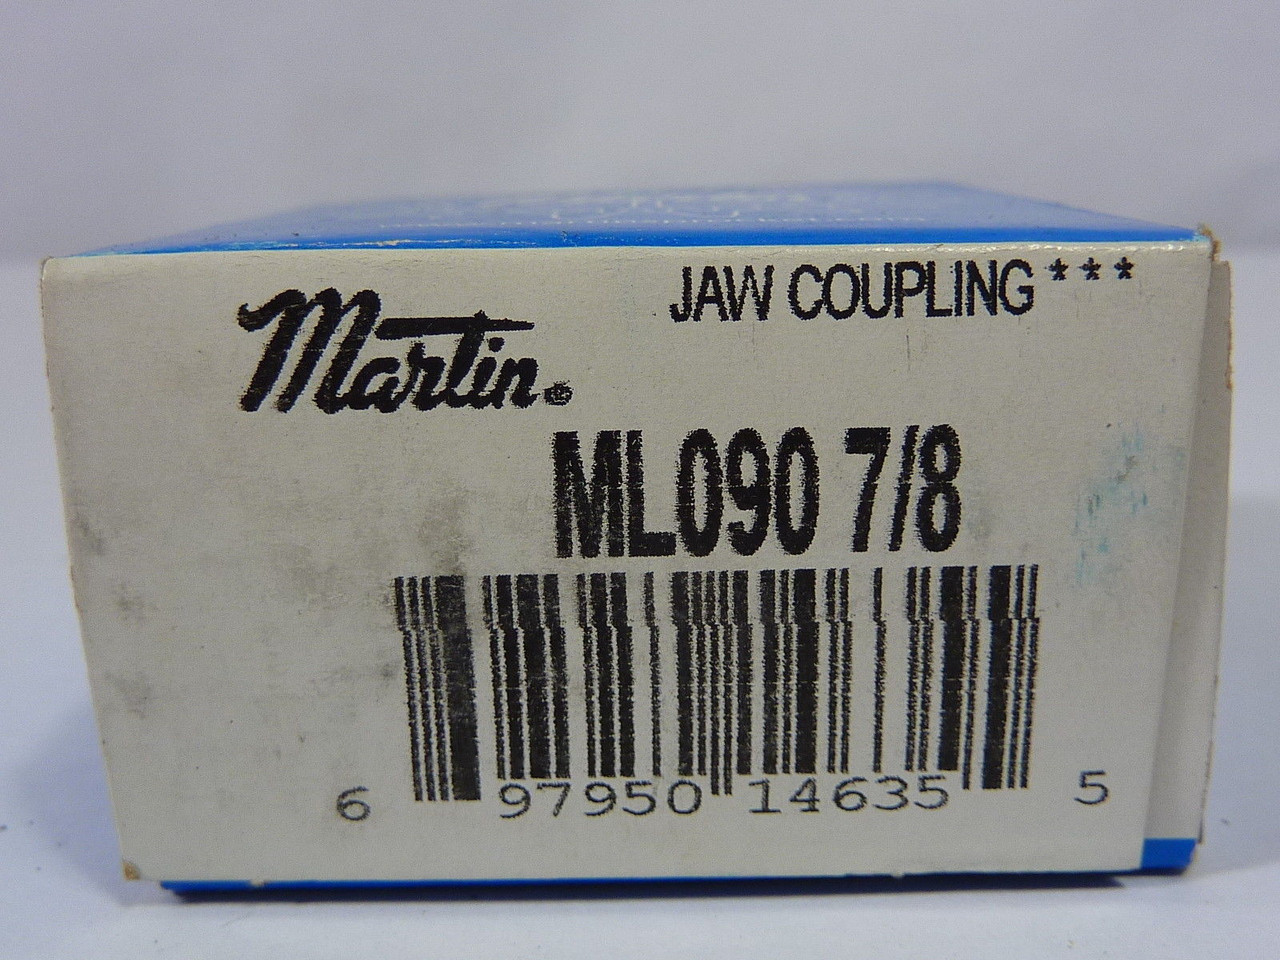 Martin Sprocket ML090 7/8 Jaw Coupling ! NEW !